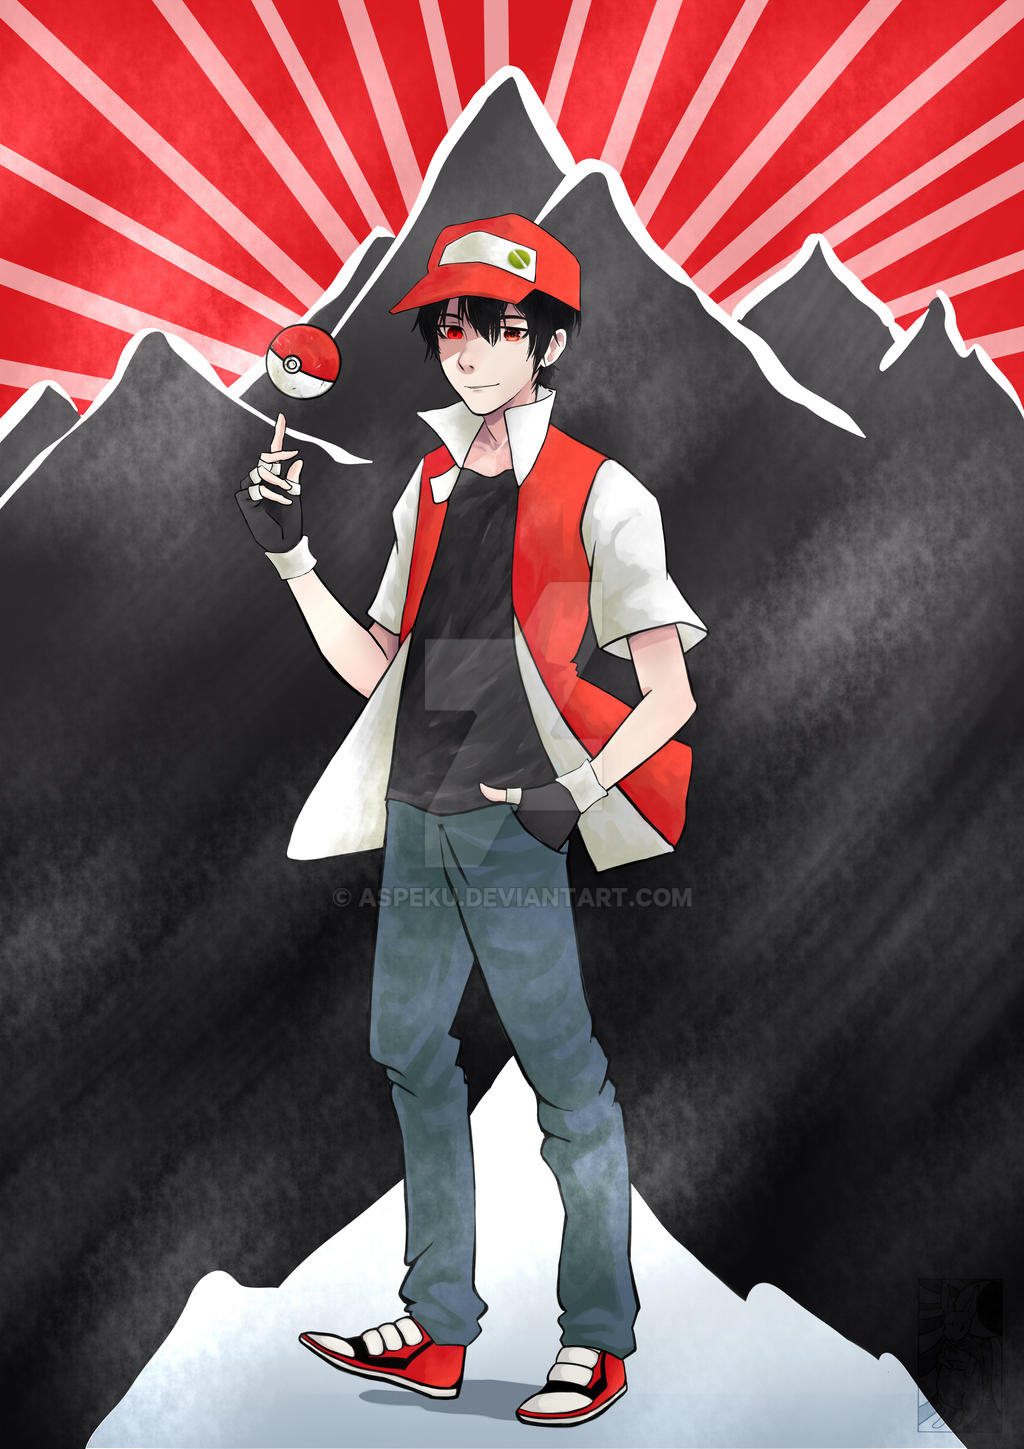 The Pokémon Champ Red